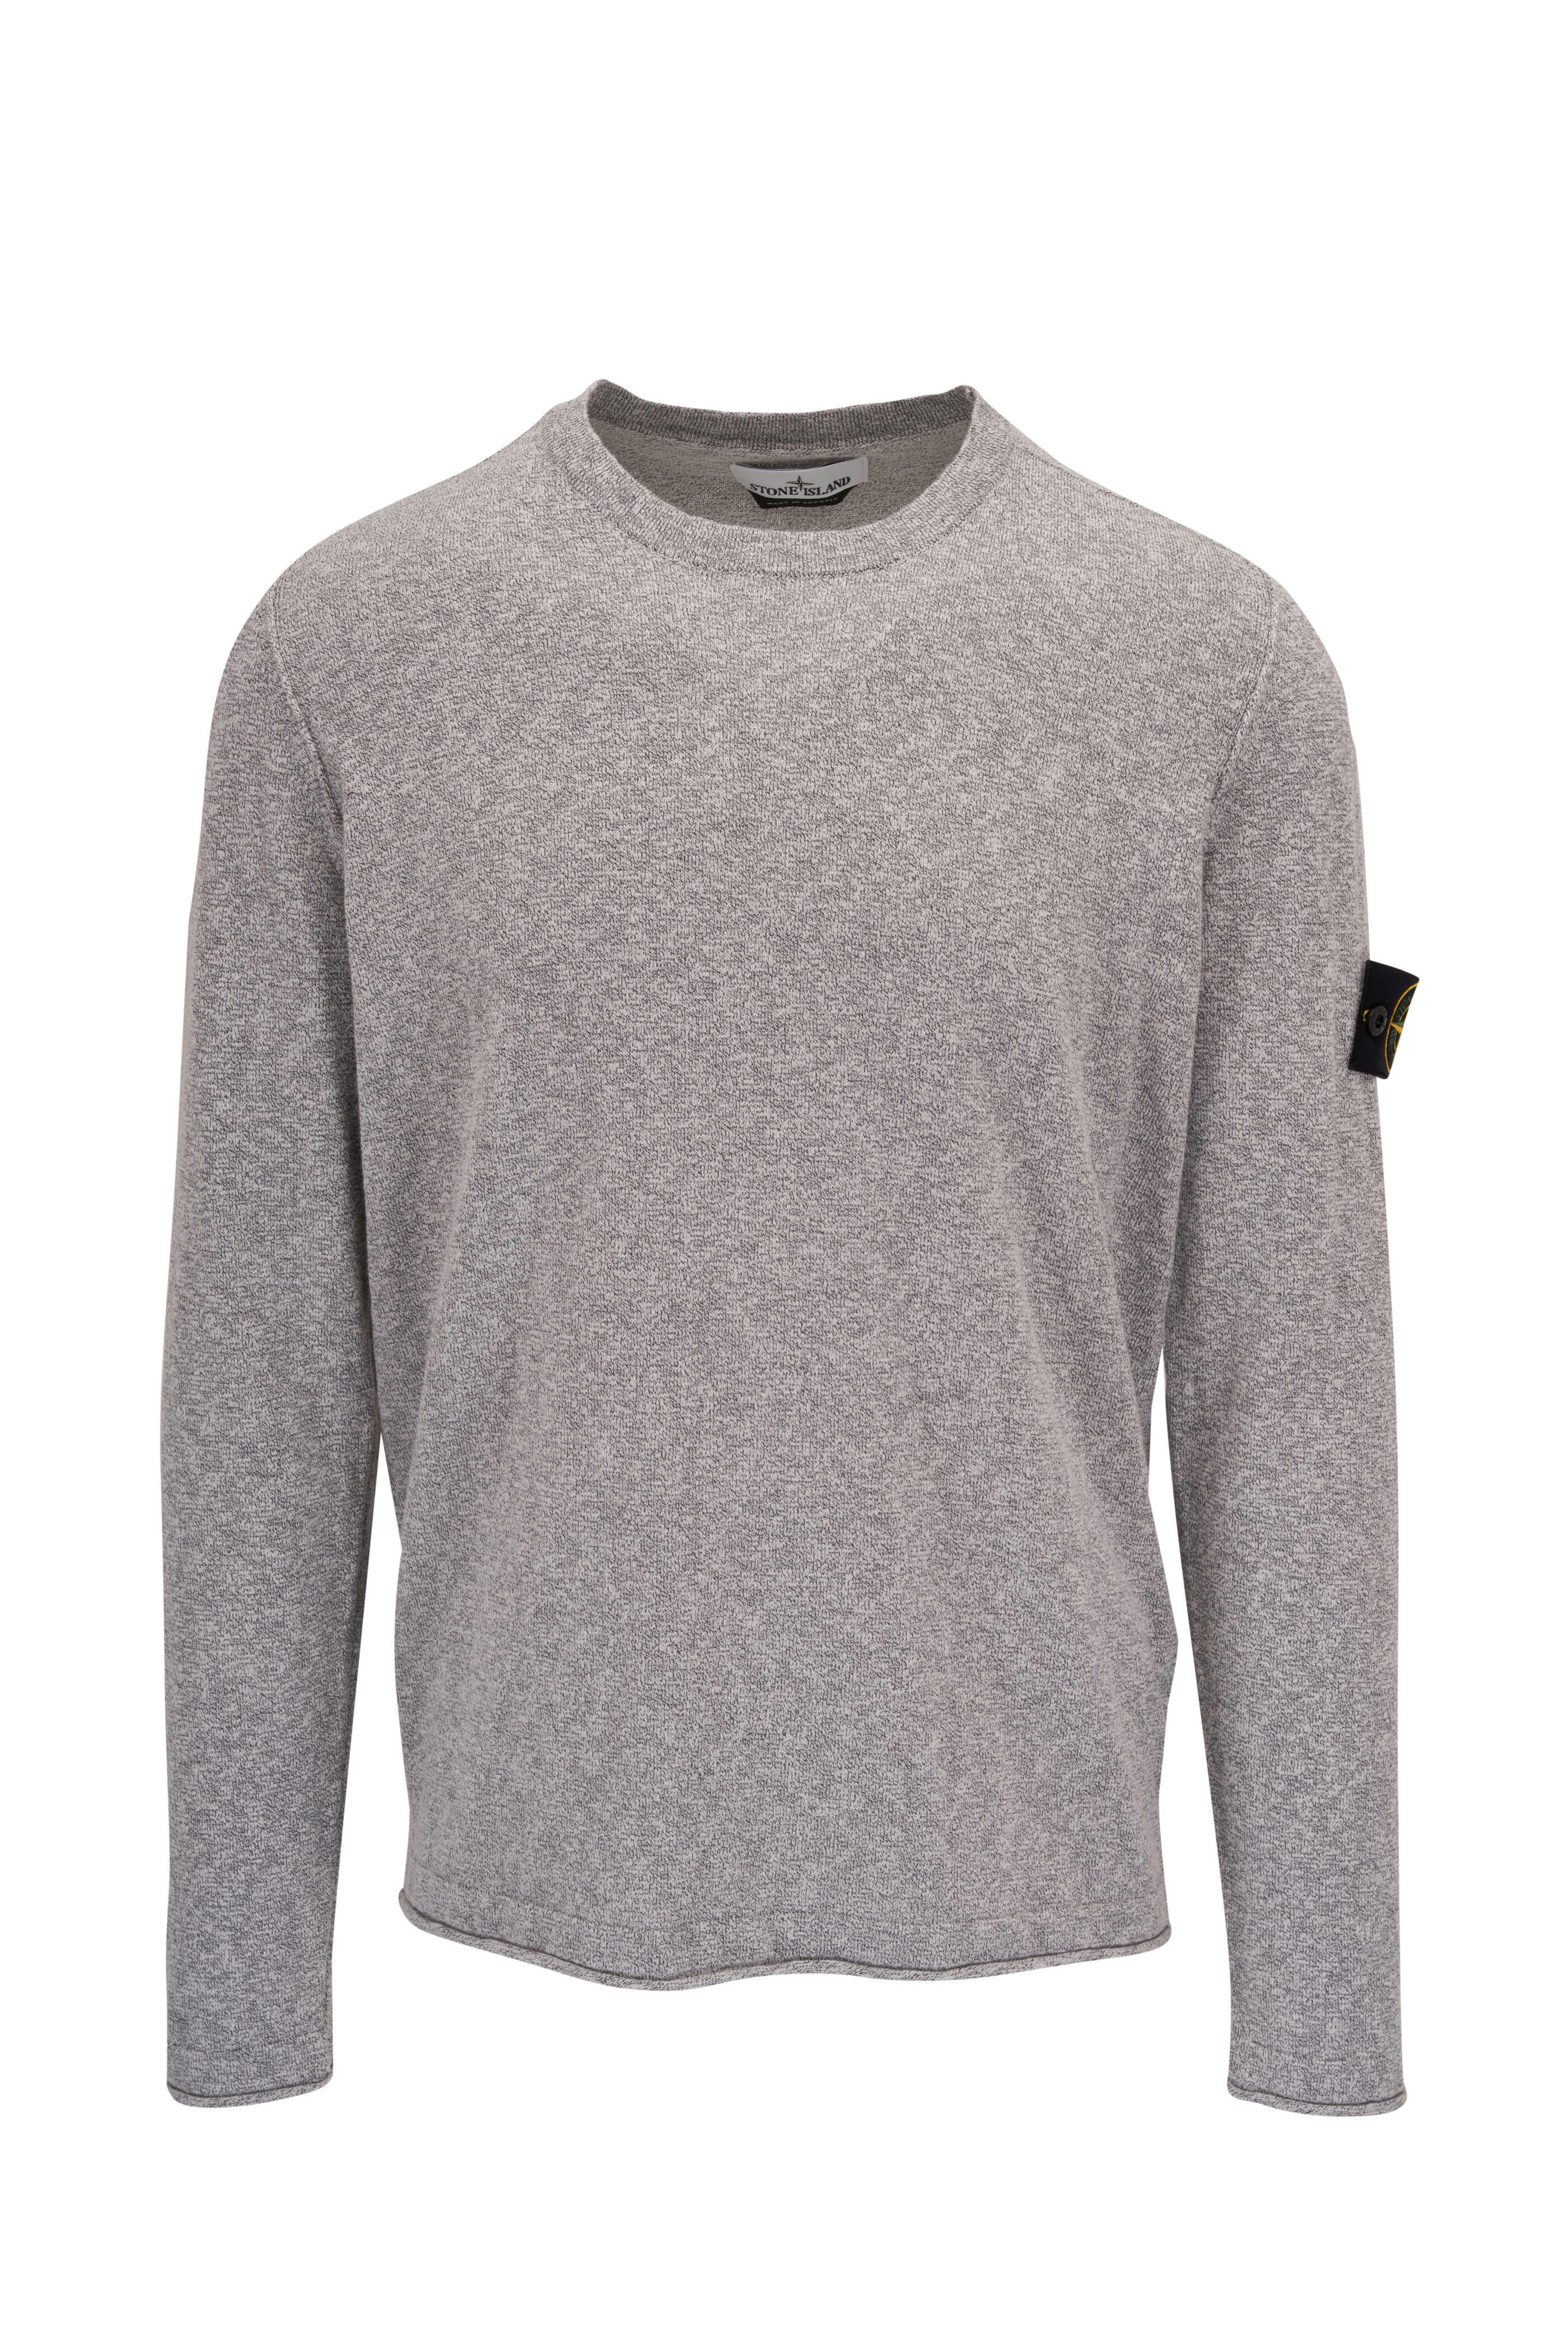 Stone Island Grey Mélange Stretch Cotton Crewneck Sweater